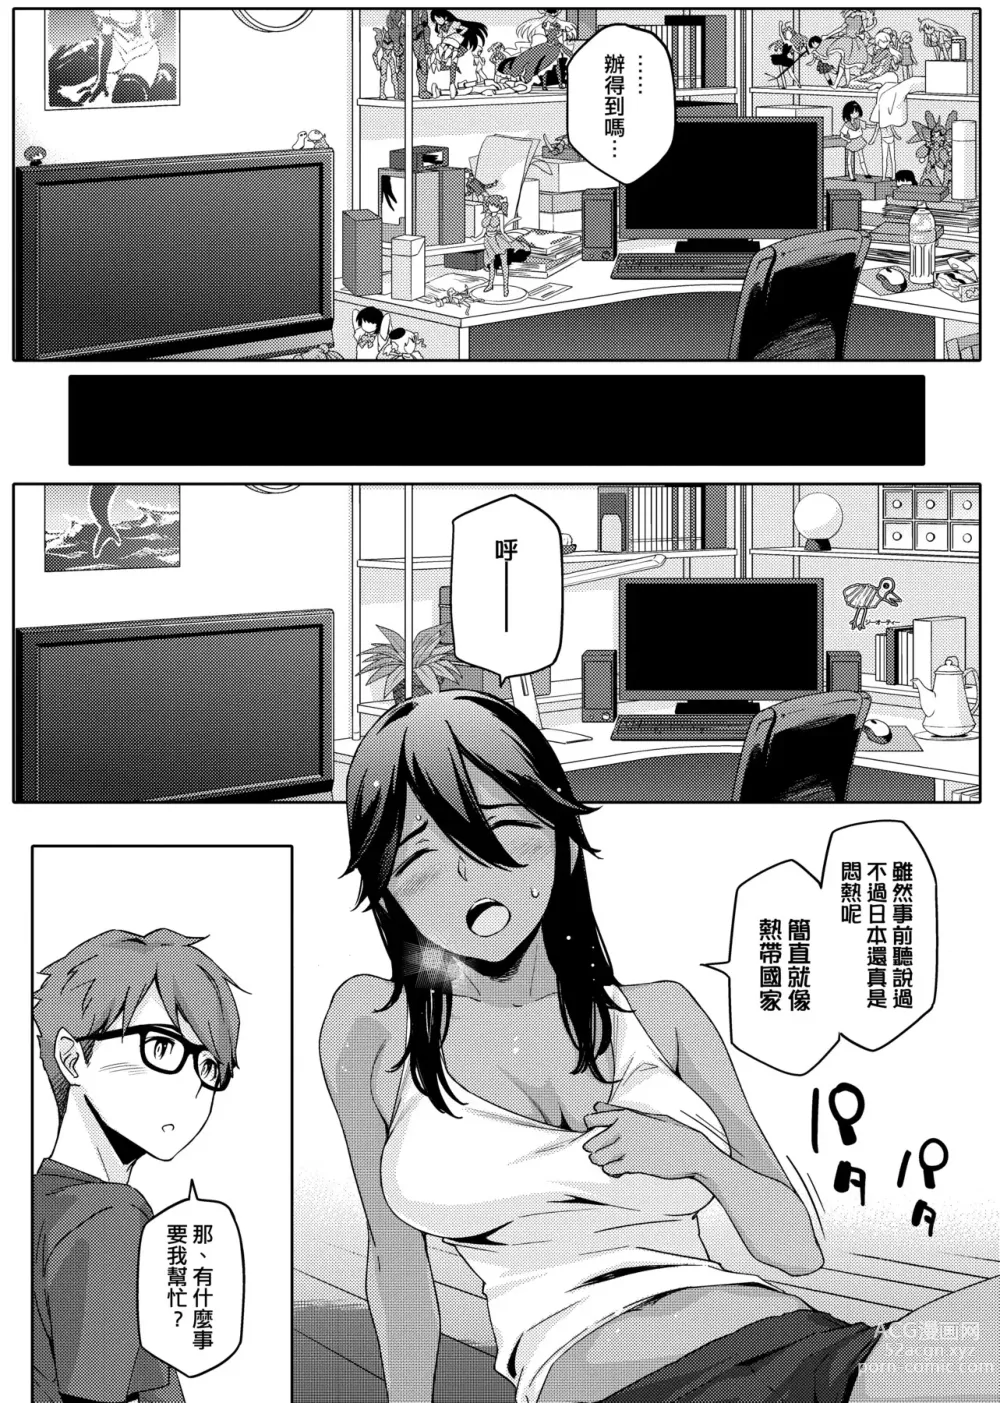 Page 10 of manga Natsu Koi Ota Girl - What Brings You to Japan?